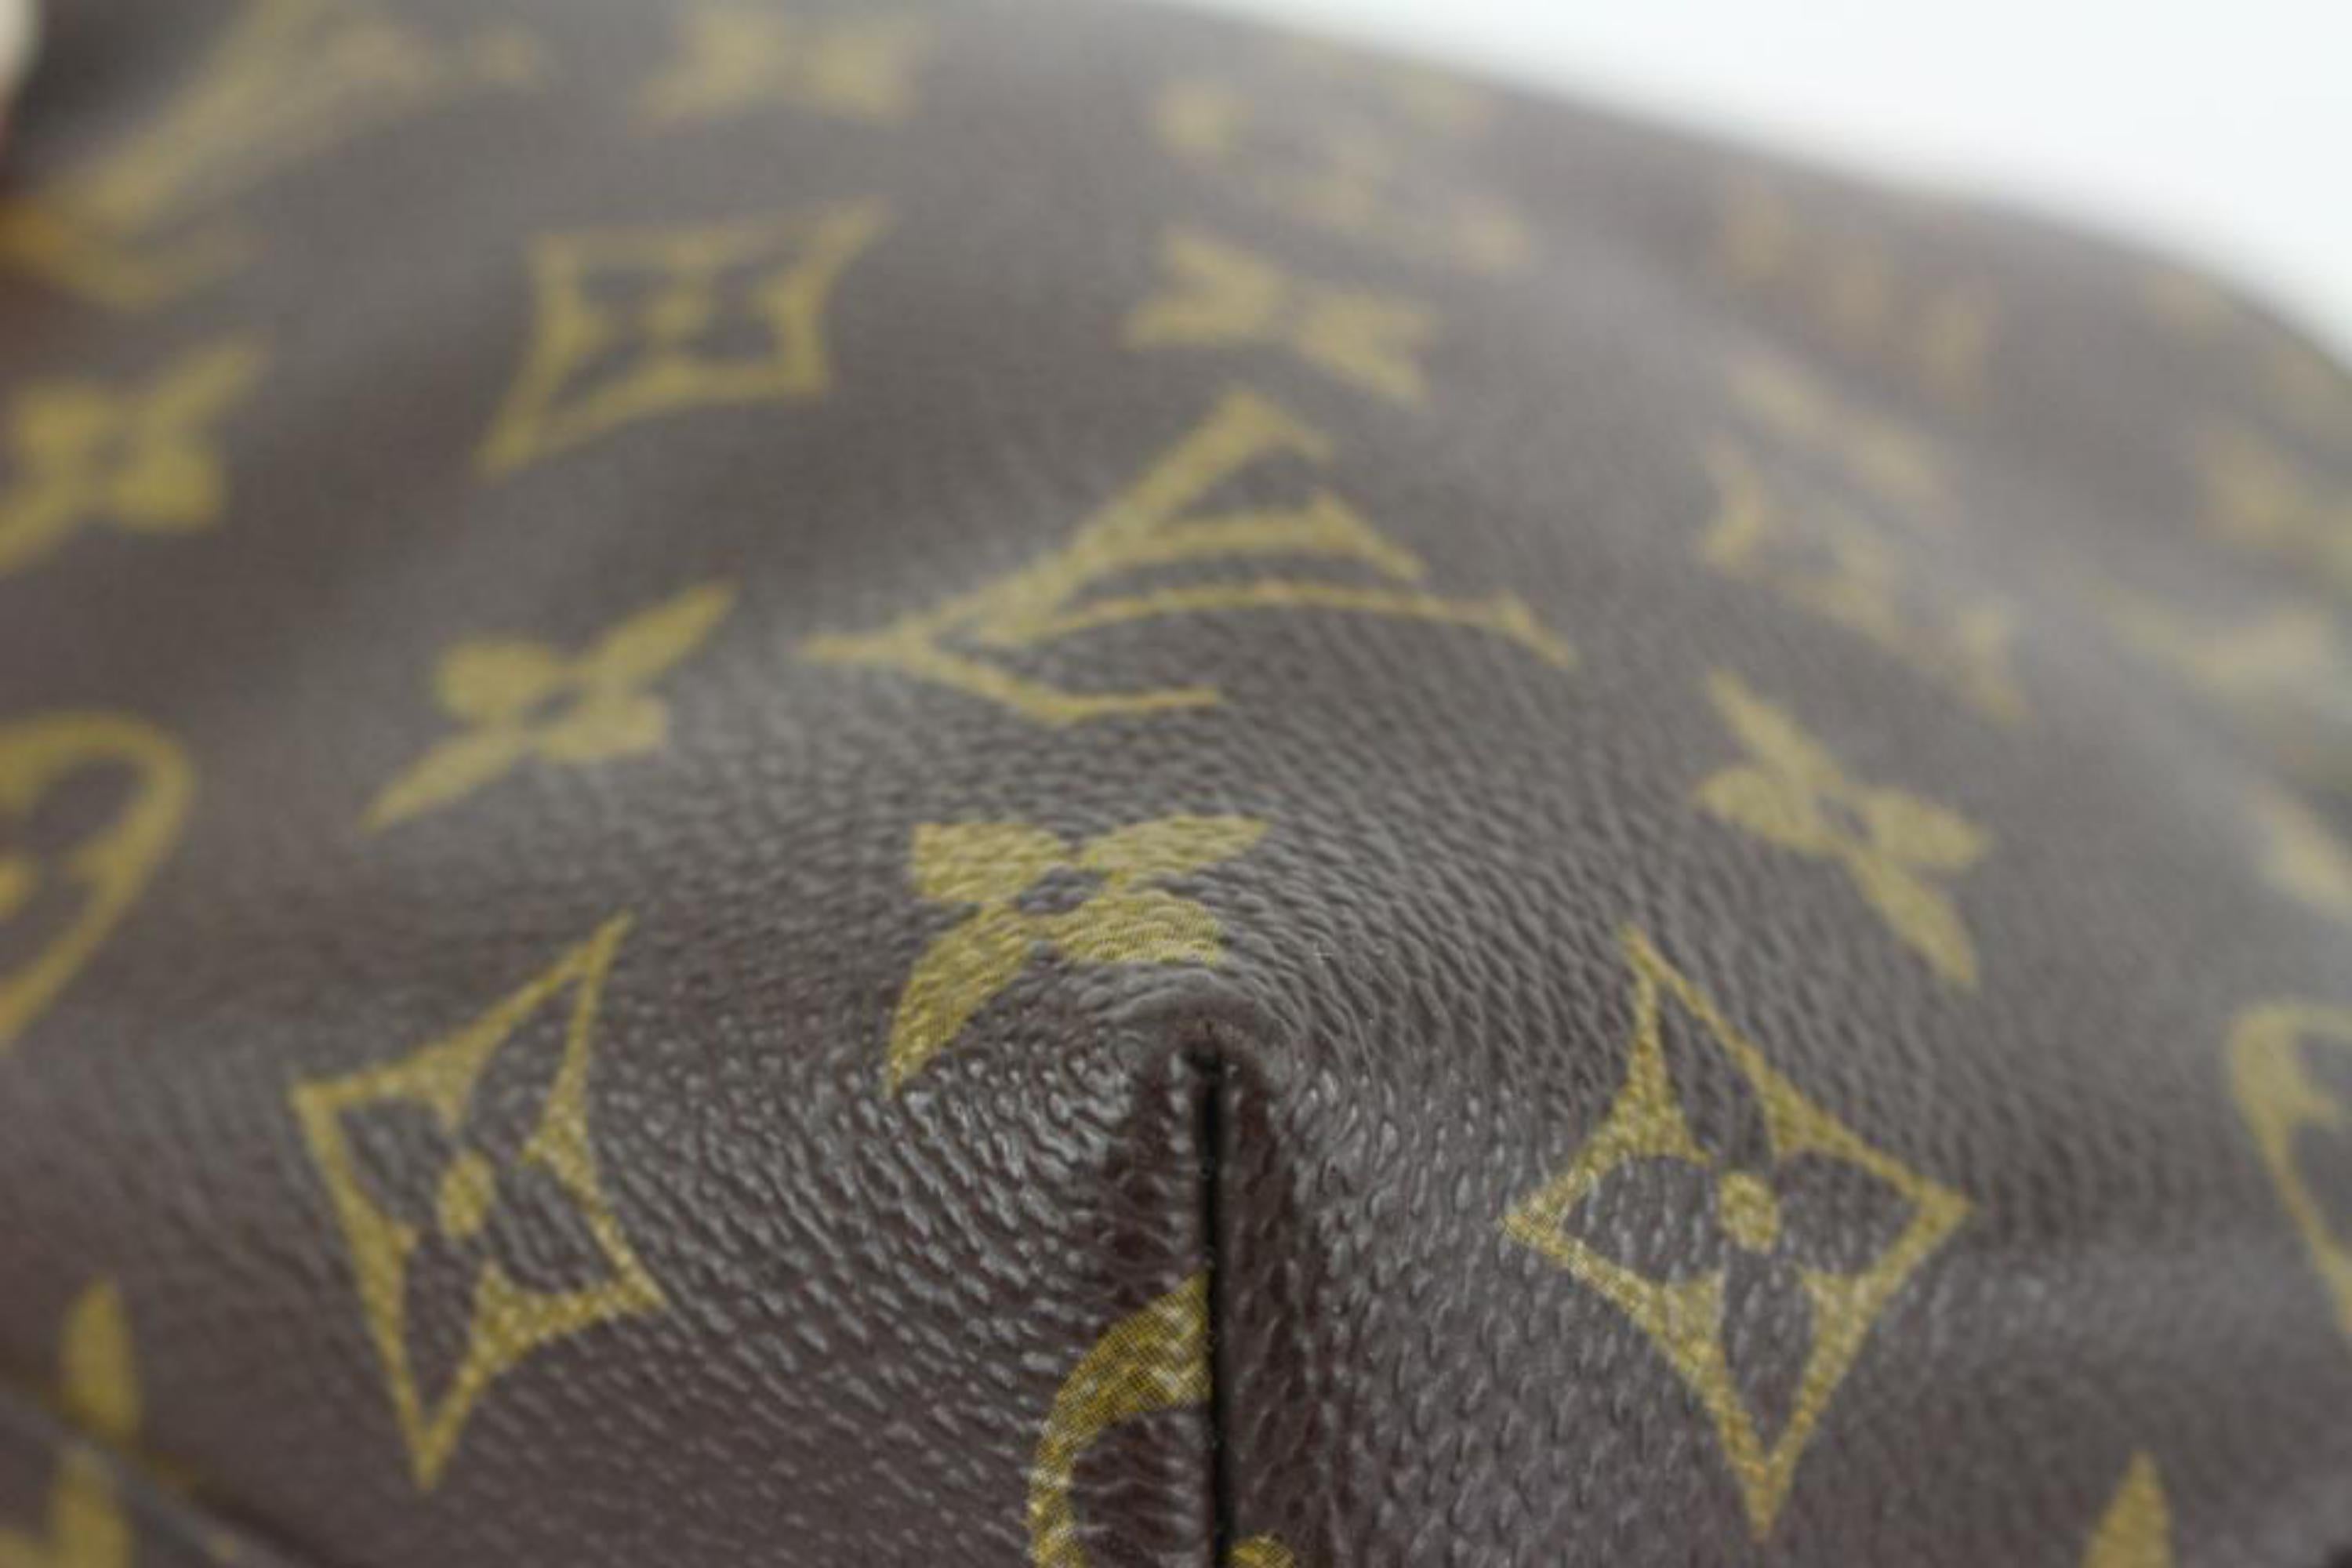 Louis Vuitton Monogram Demi Ronde GM Cosmetic Bag - A World Of